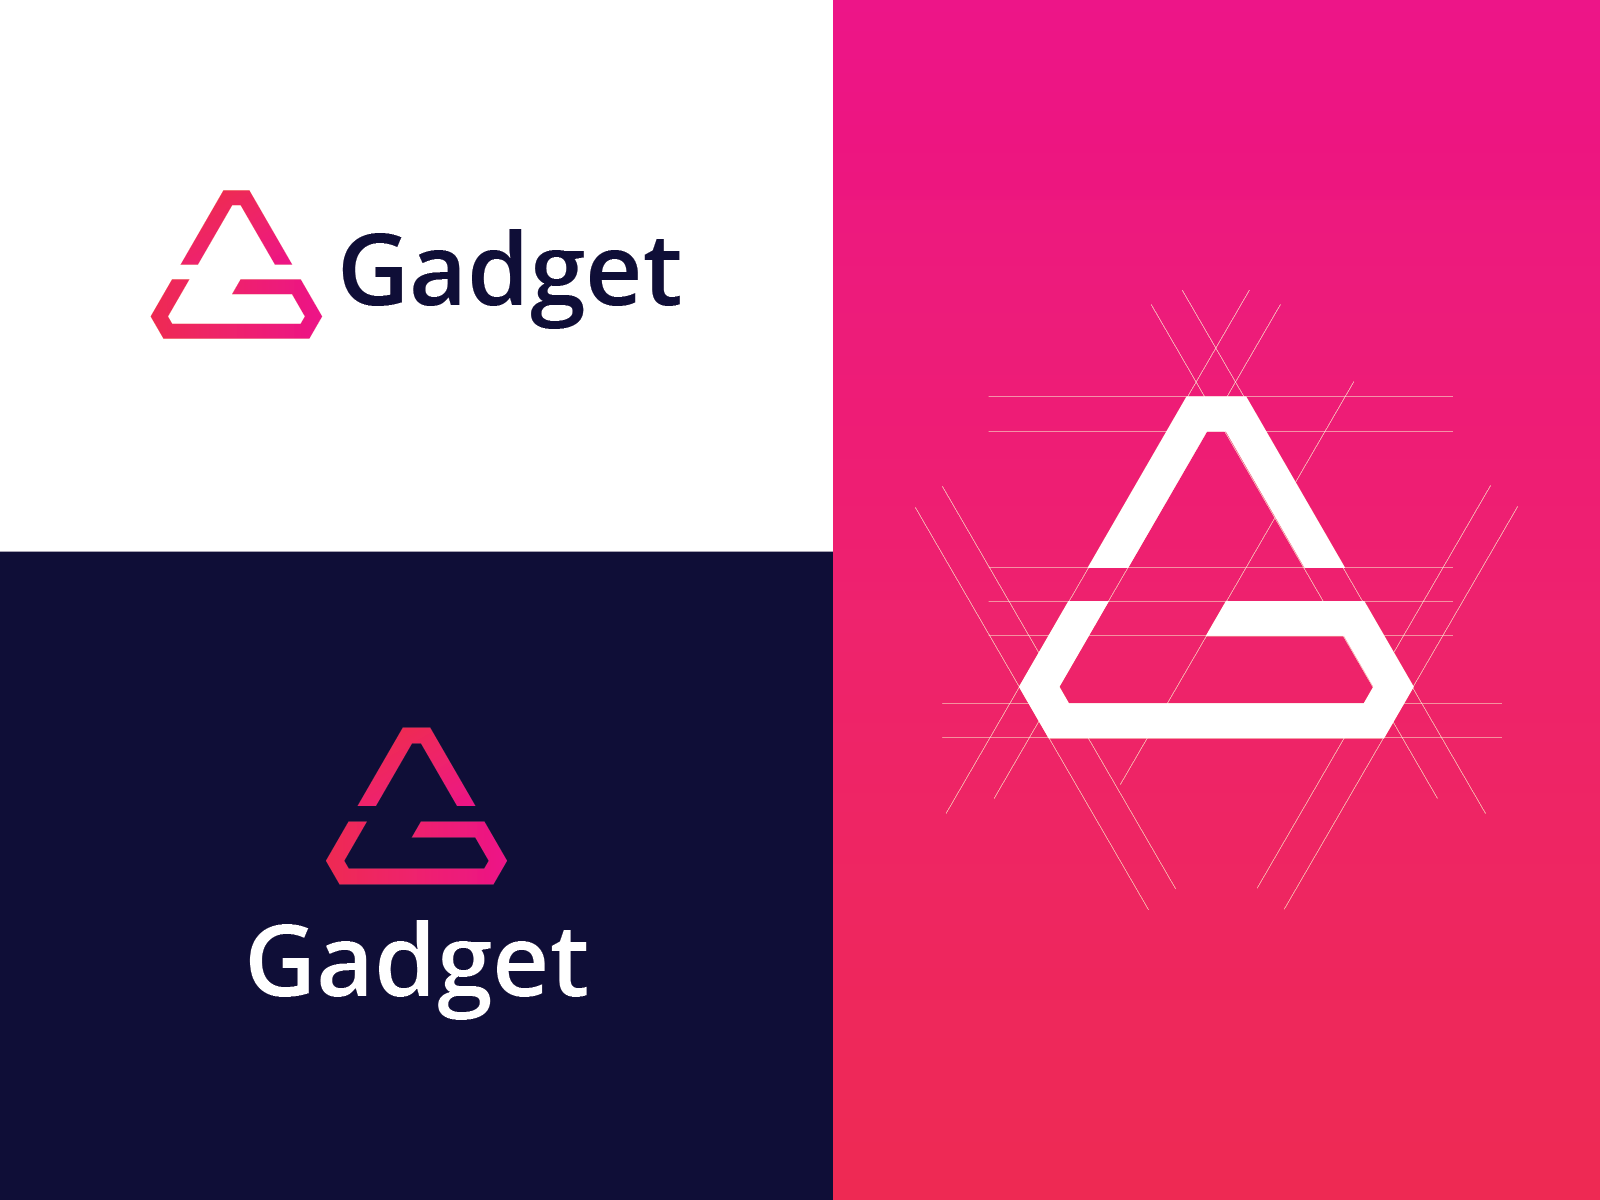 Pocket Gadget, Mobile phone Logo Design Inspiration Stock Vector | Adobe  Stock